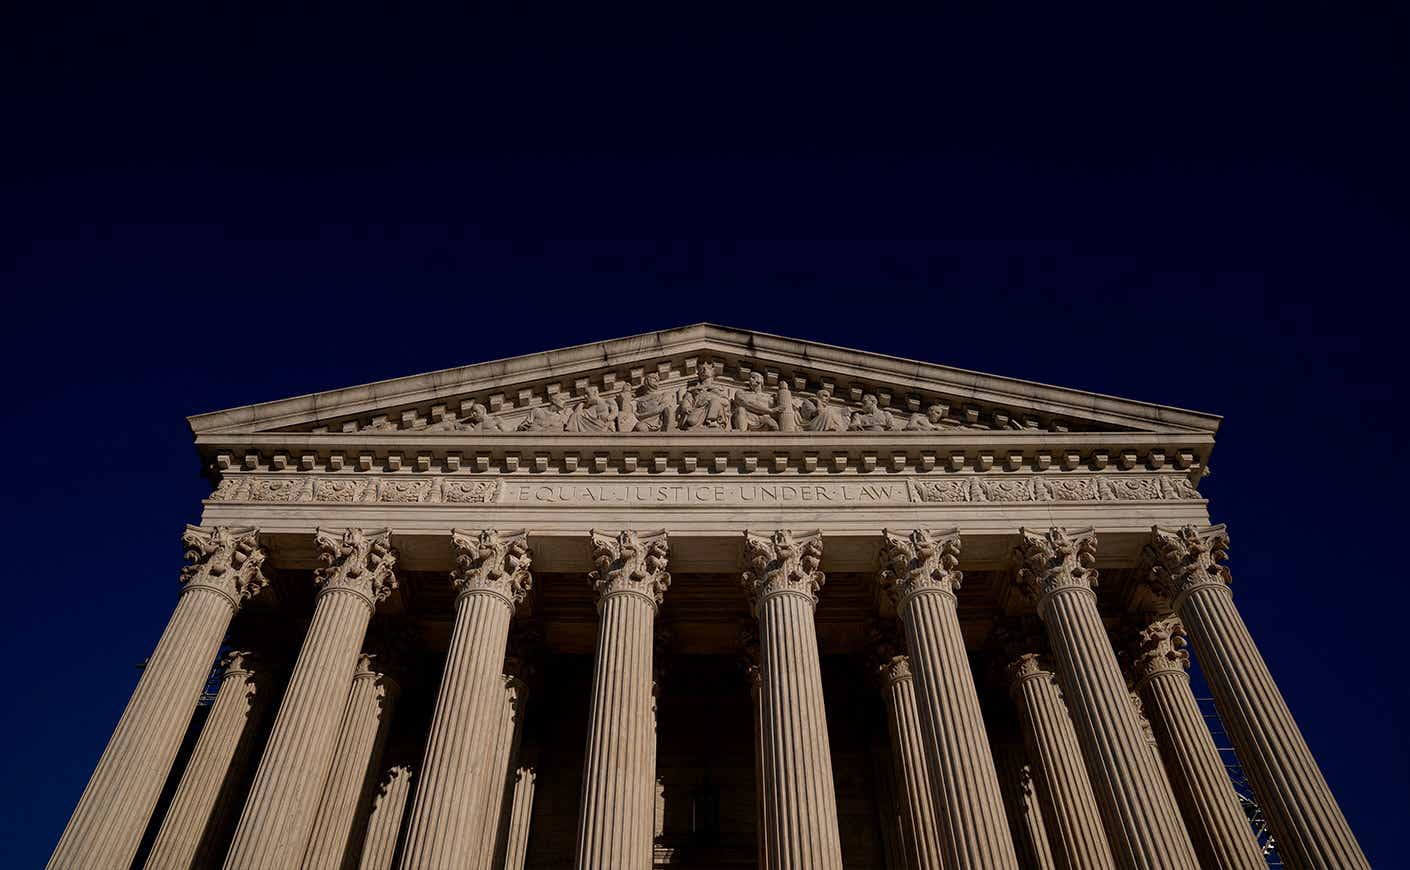 Supreme court on dark blue sky